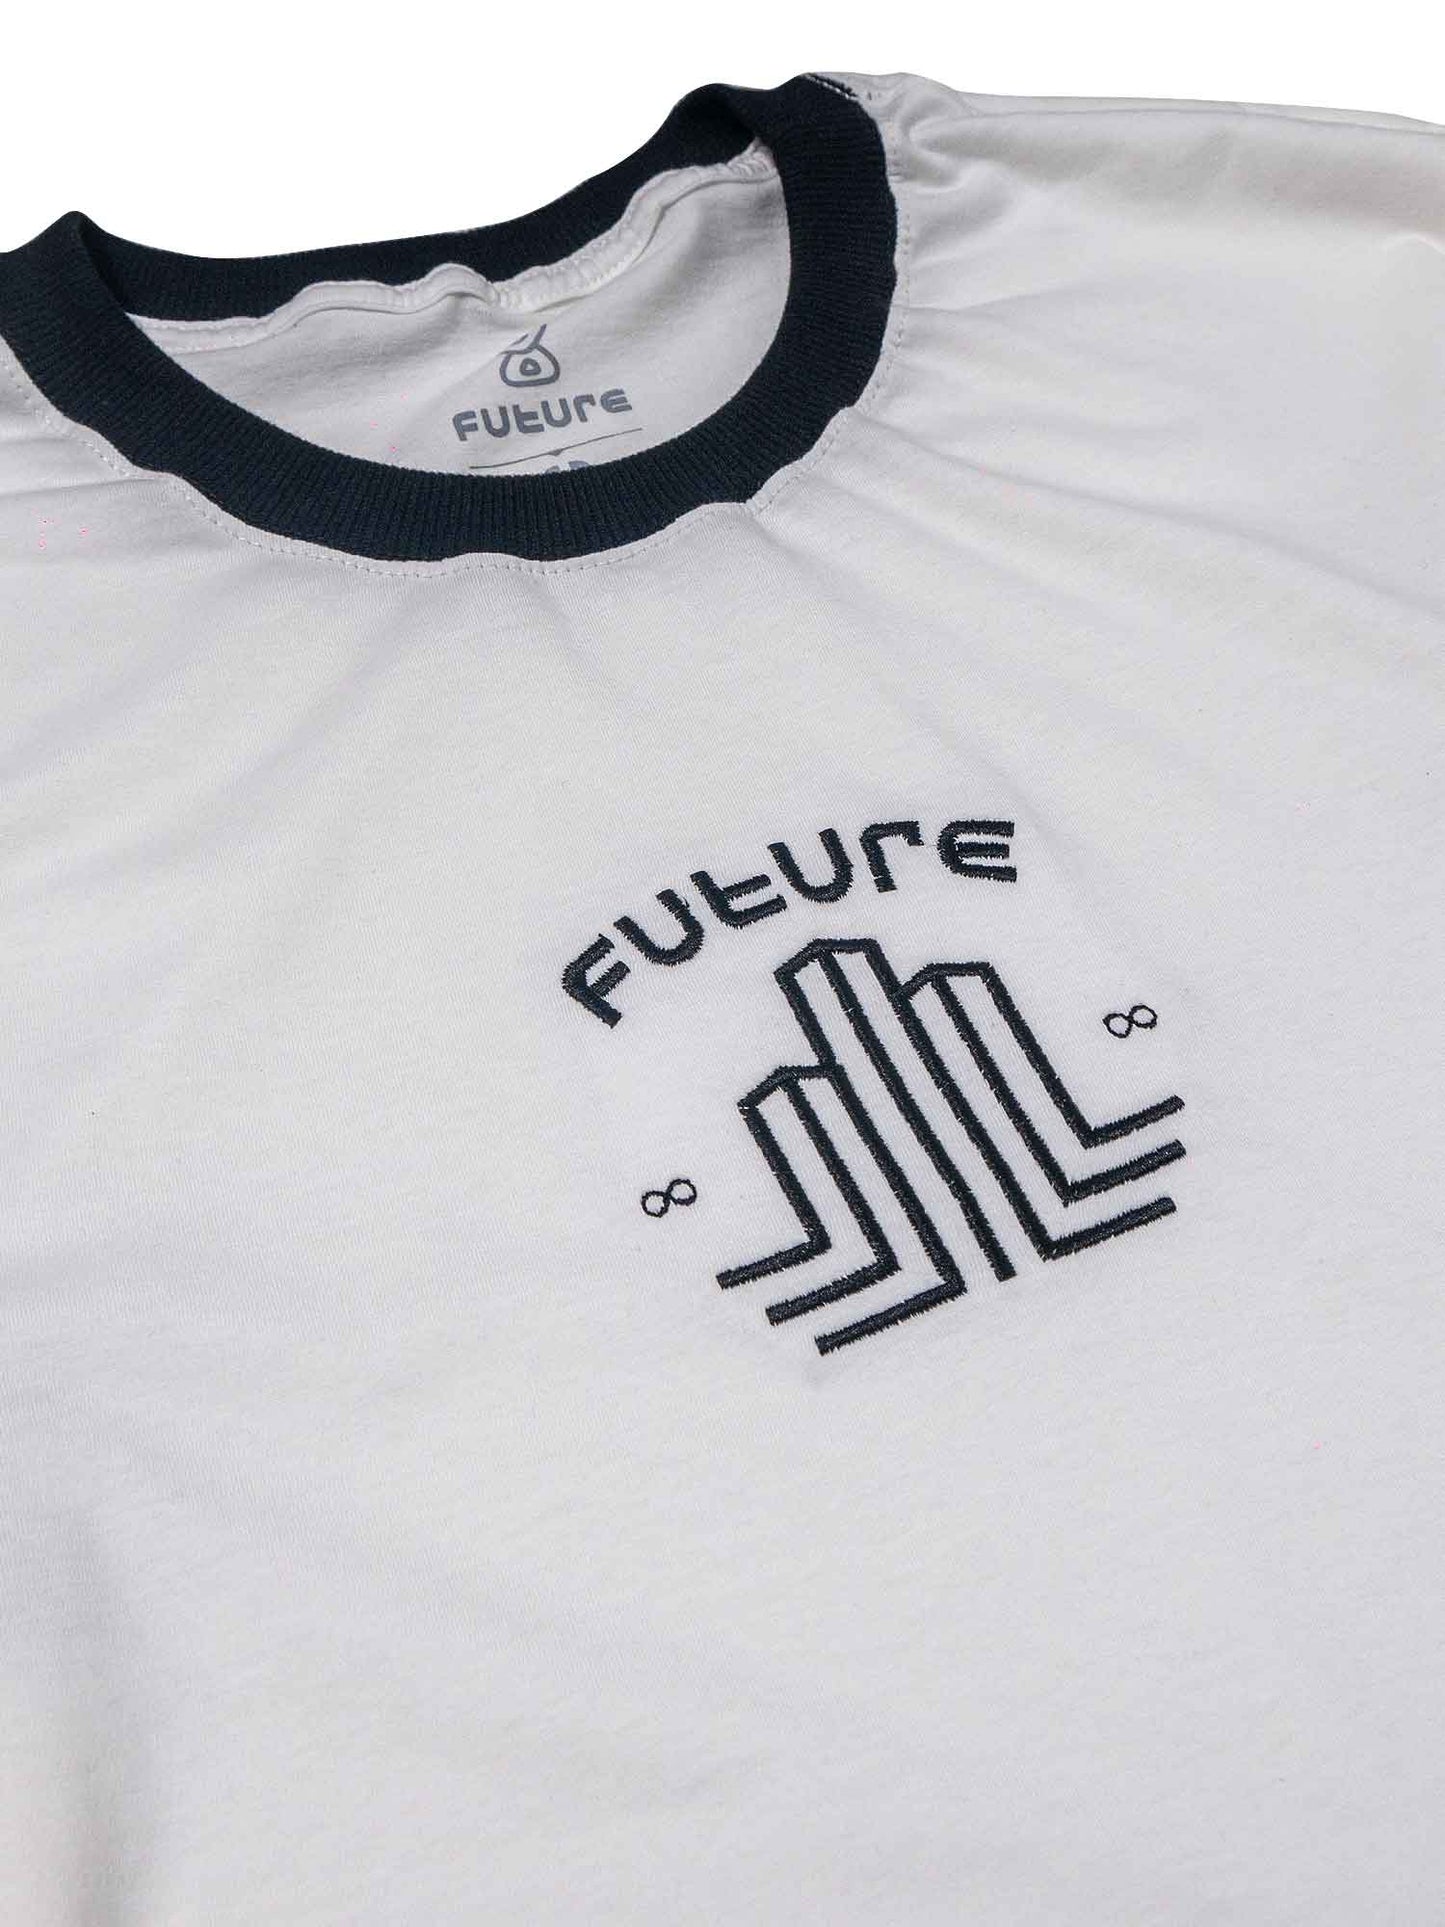    Camiseta-Future-City-Players-Off-White-Frente-Close